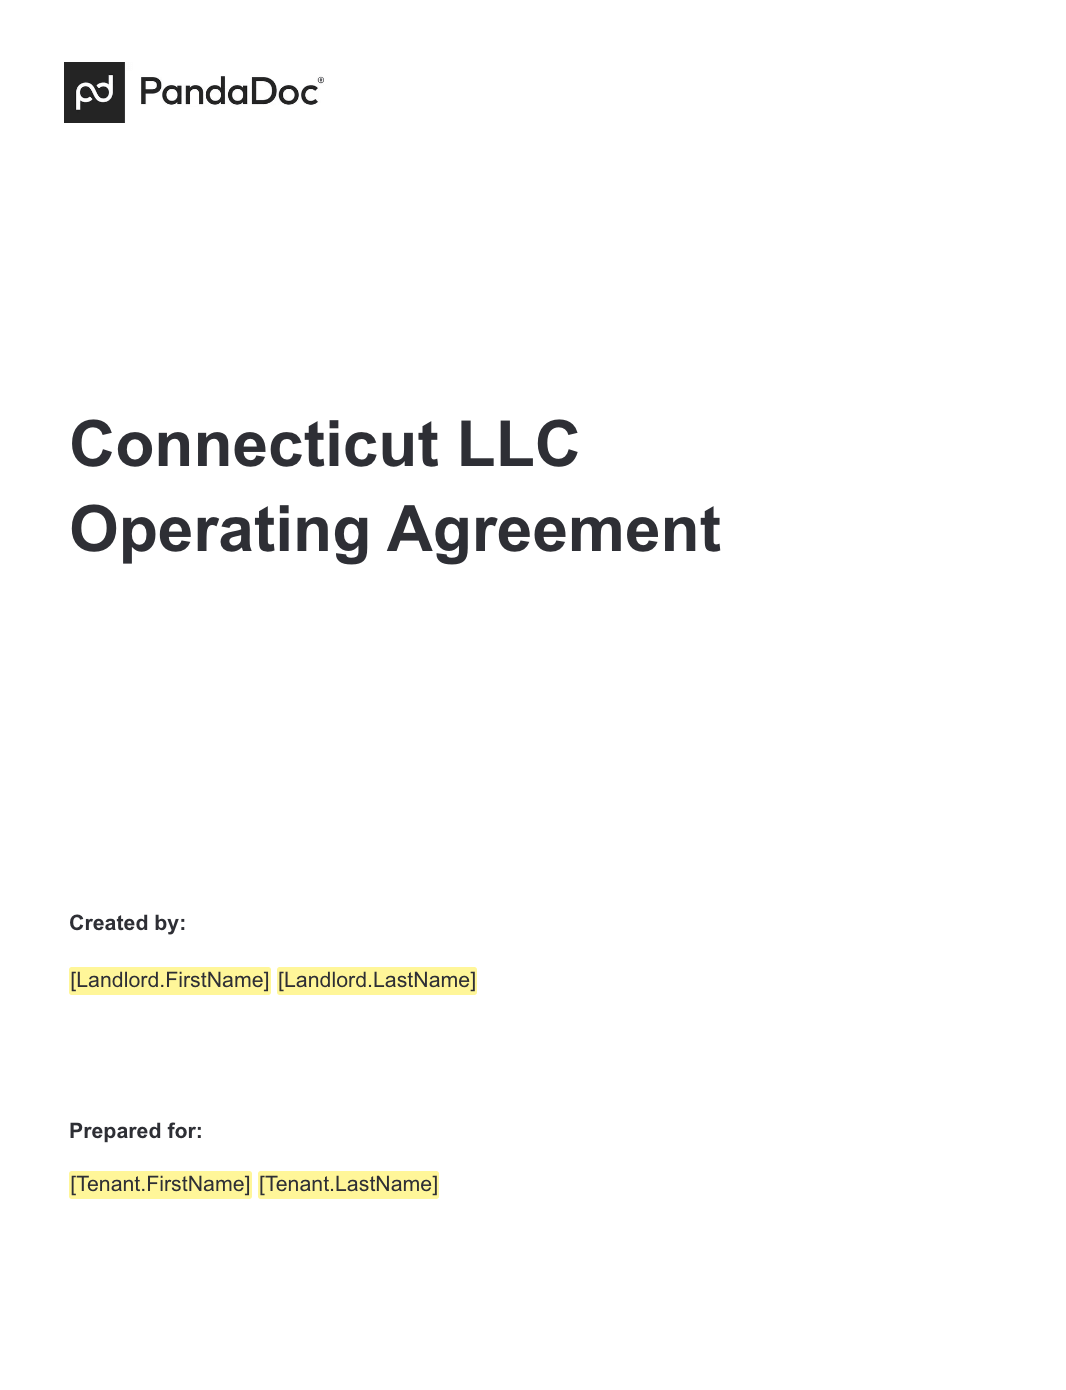 Connecticut LLC Operating Agreement 